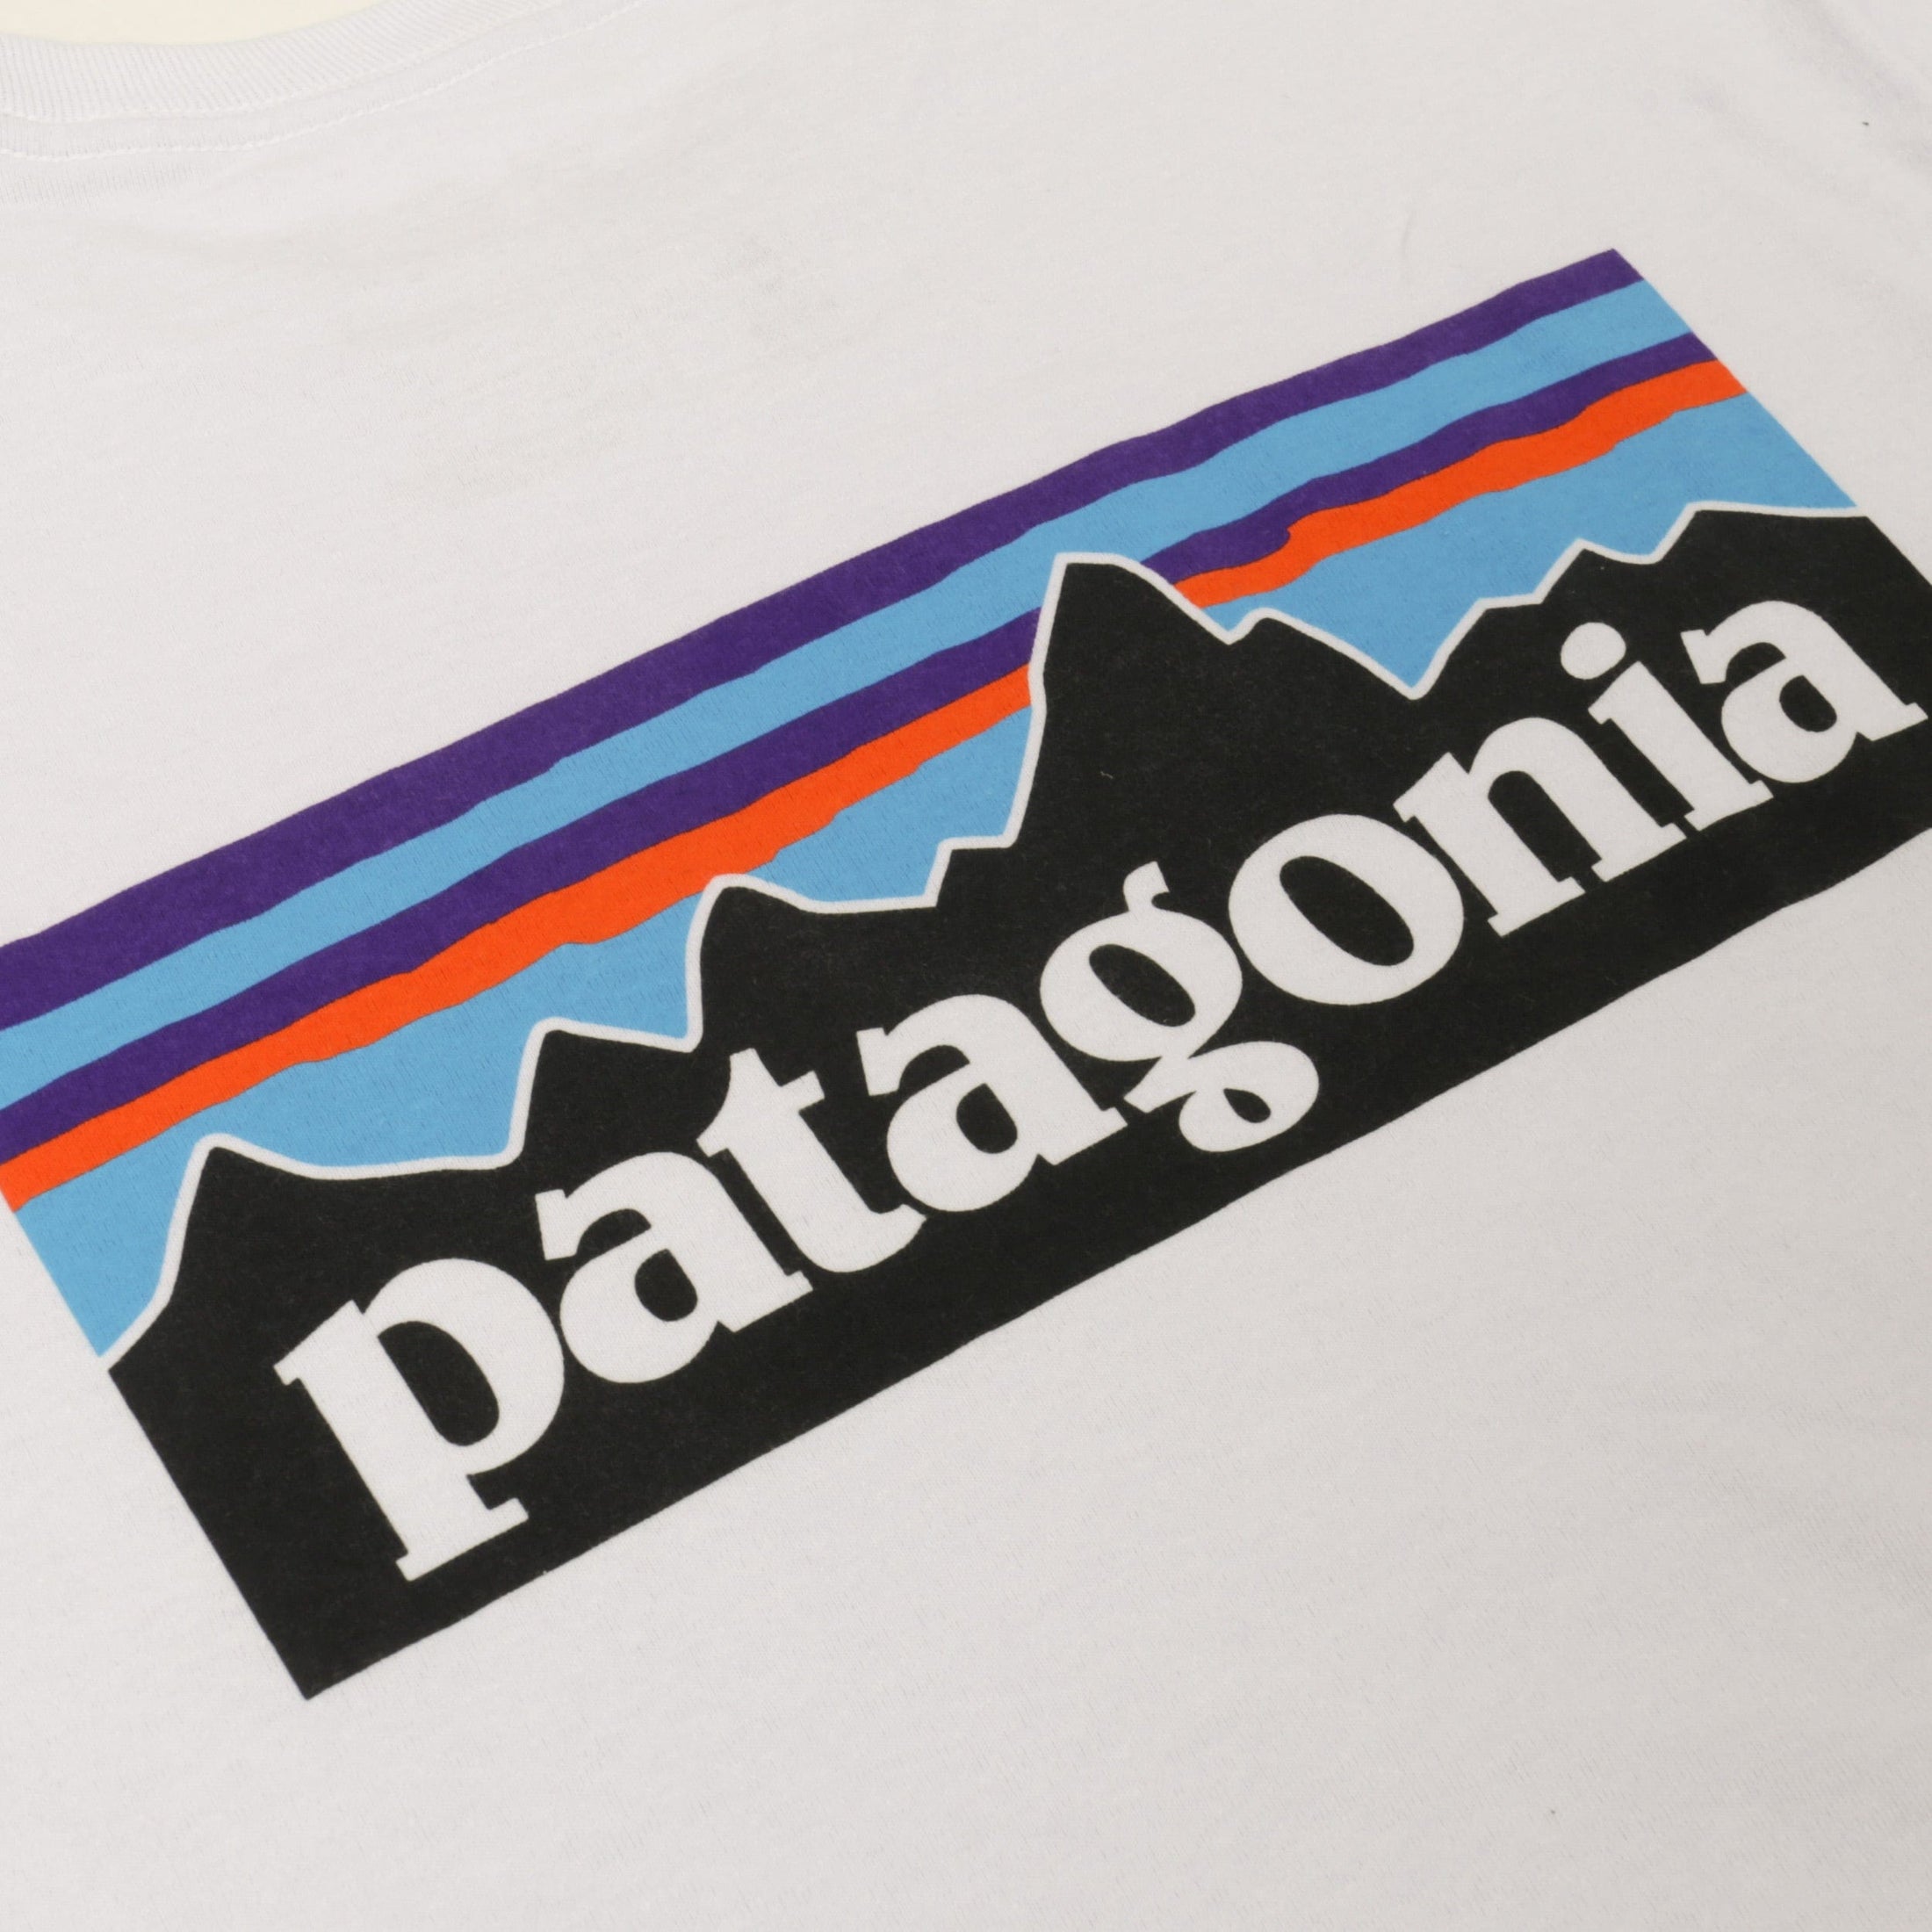 Patagonia P-6 Logo Responsibili-Tee T-Shirt White